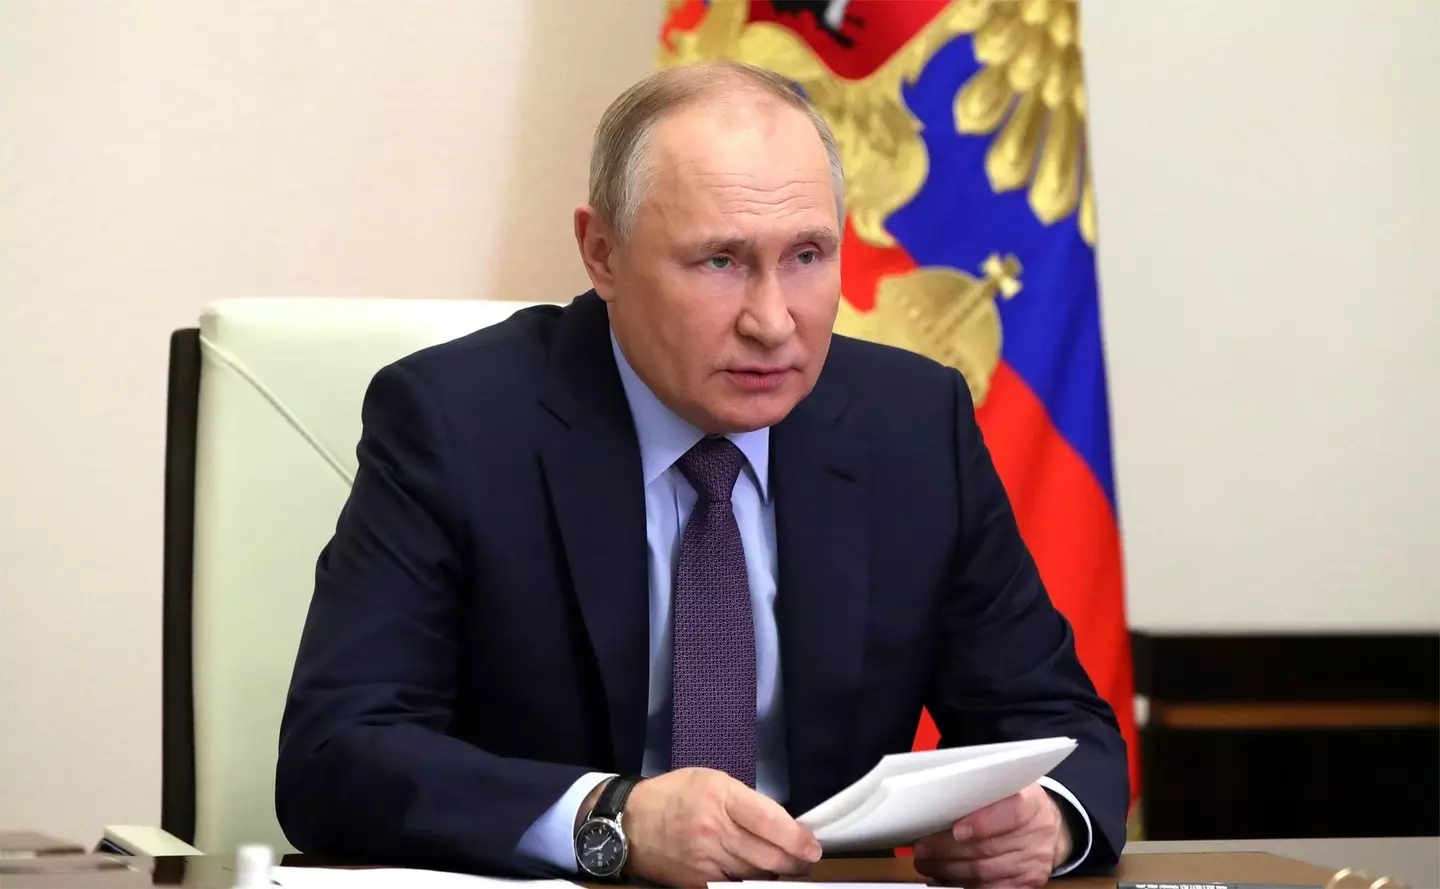 Russian leader Vladimir Putin invaded Ukraine in February.